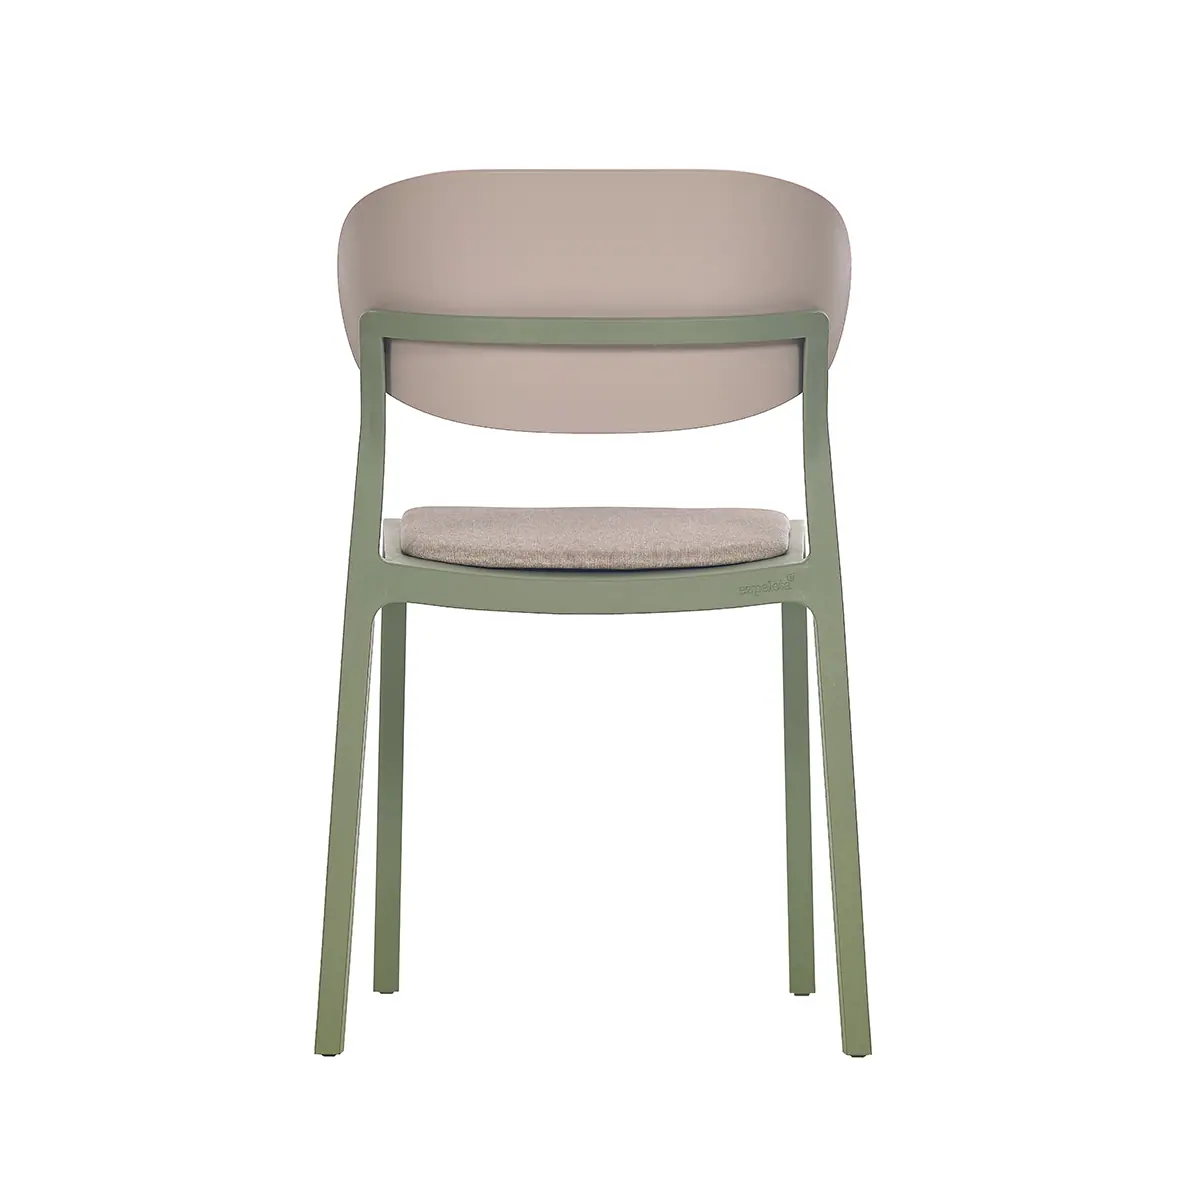 81405-81400-bake-pad-chair